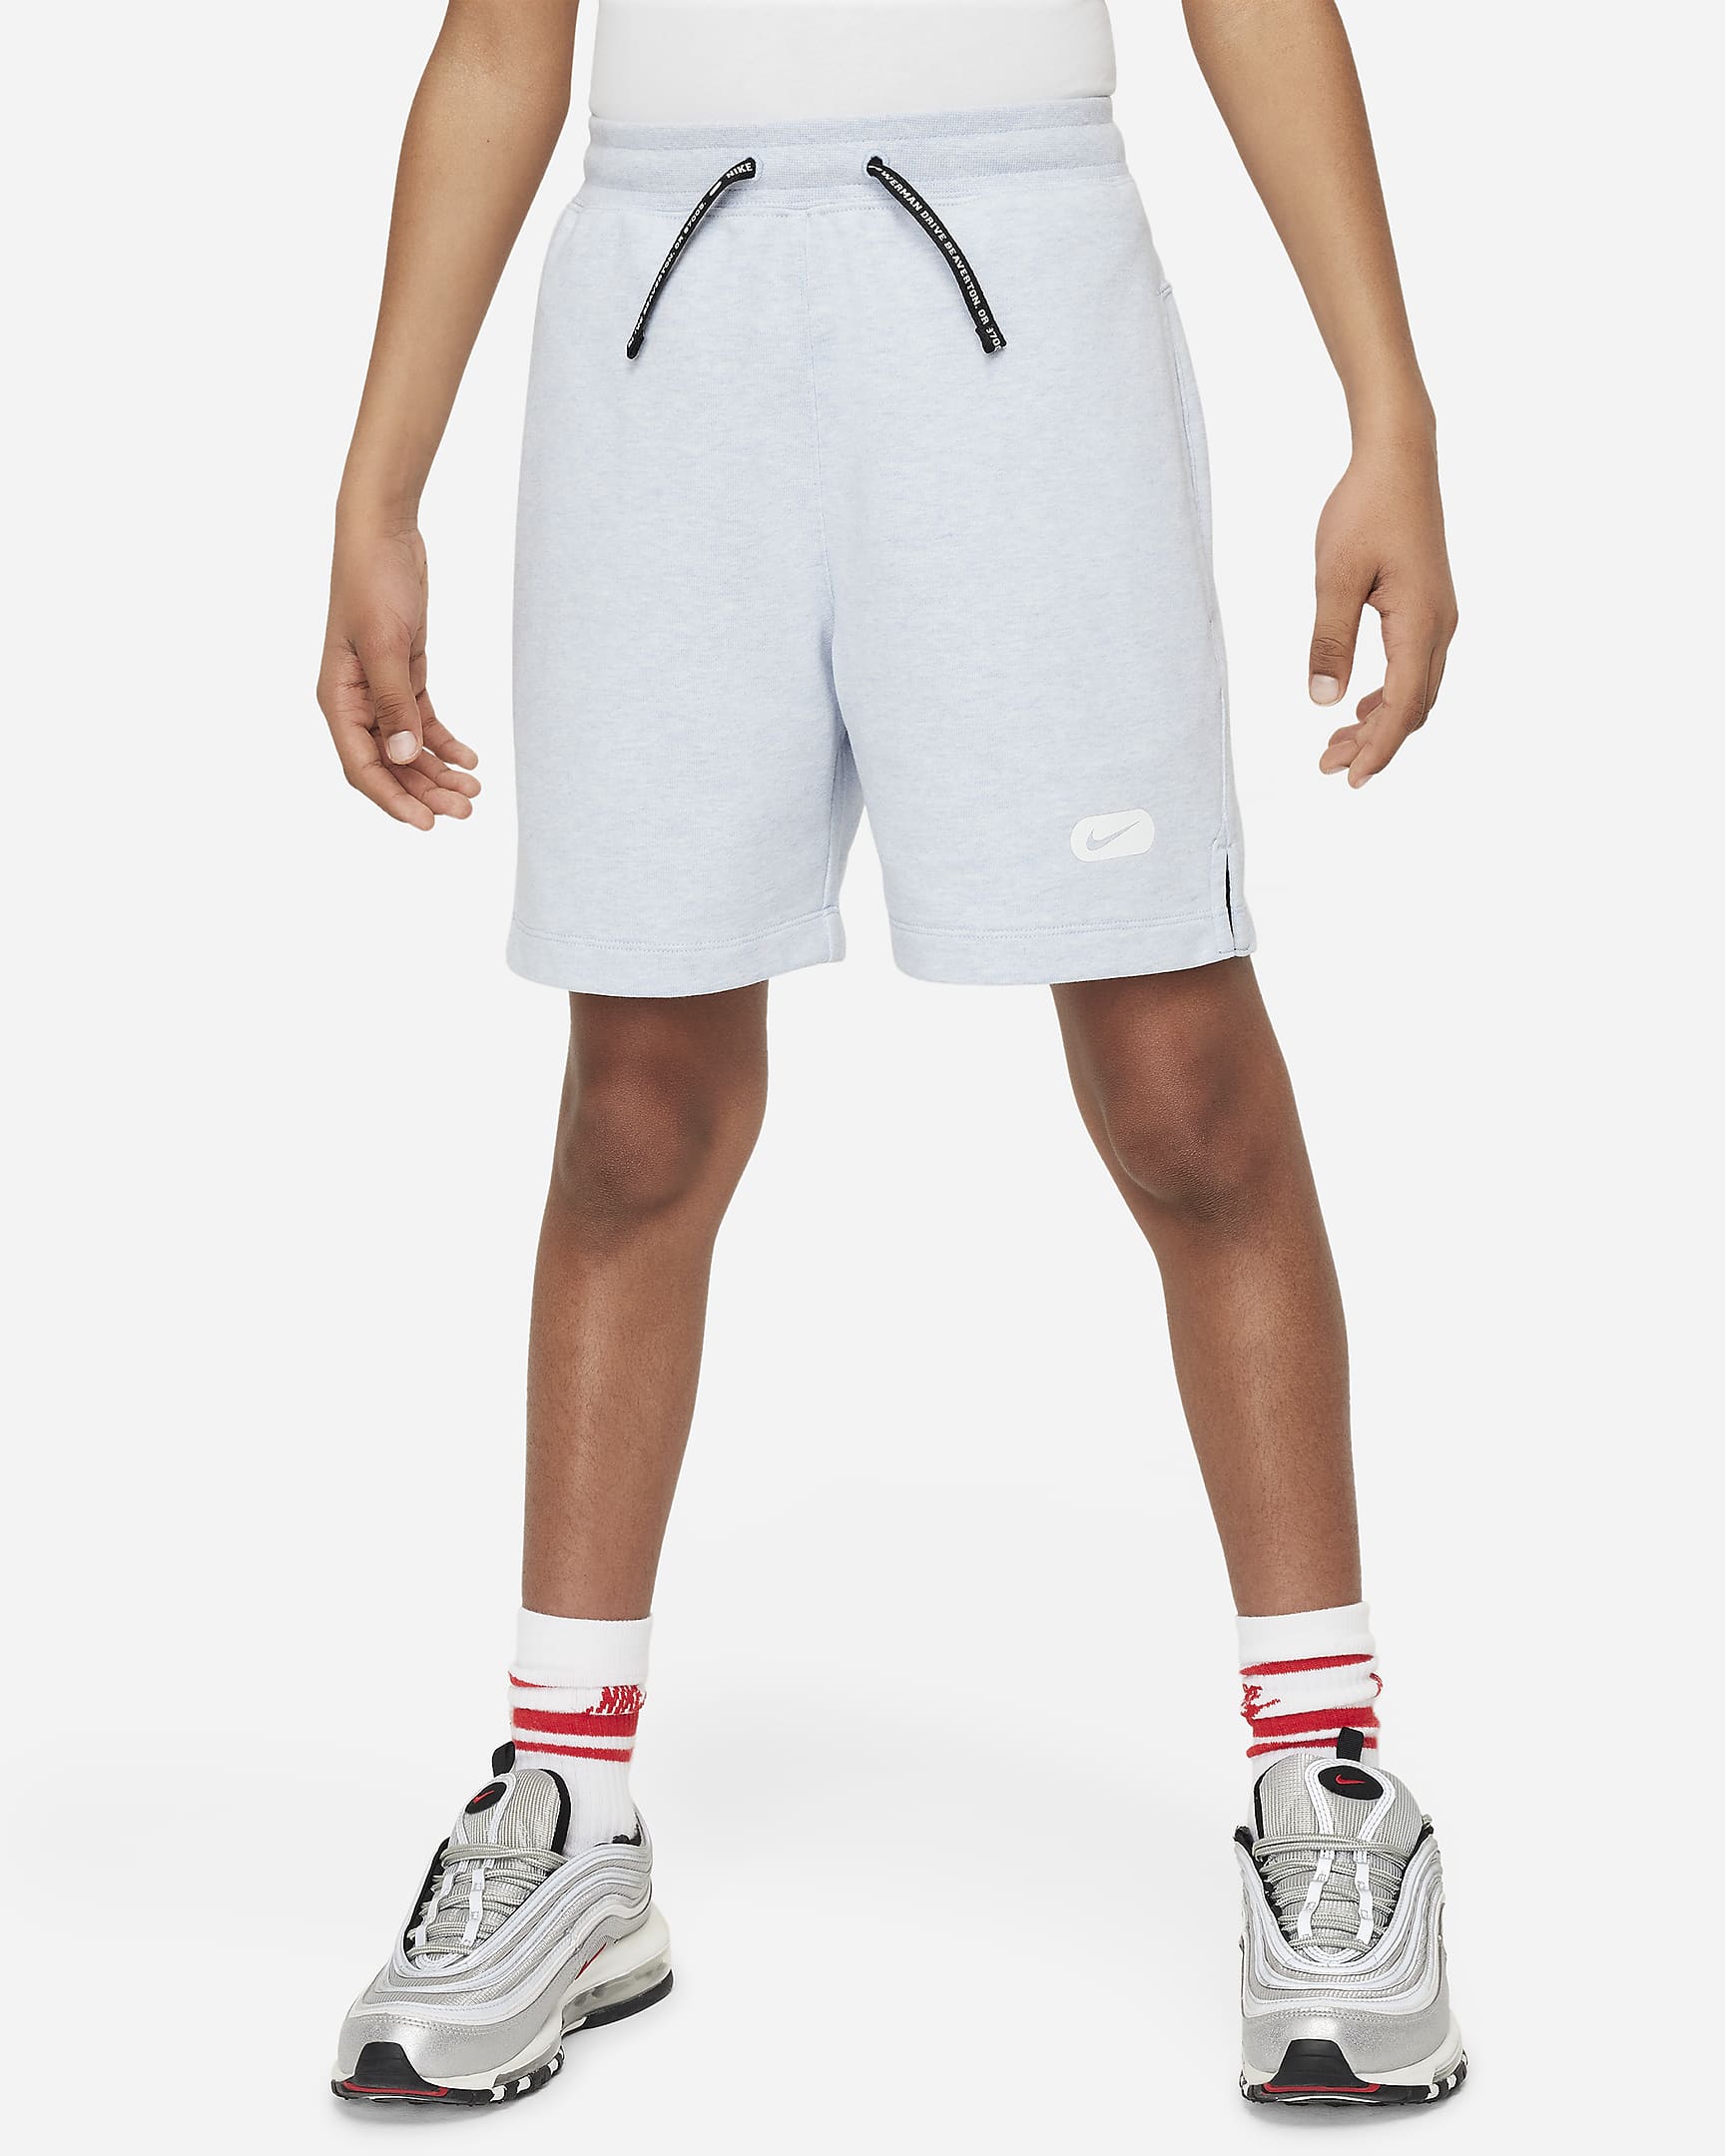 Nike Dri-FIT Athletics Pantalons curts de teixit Fleece d'entrenament - Nen - Light Armory Blue/Jaspiat/Blanc